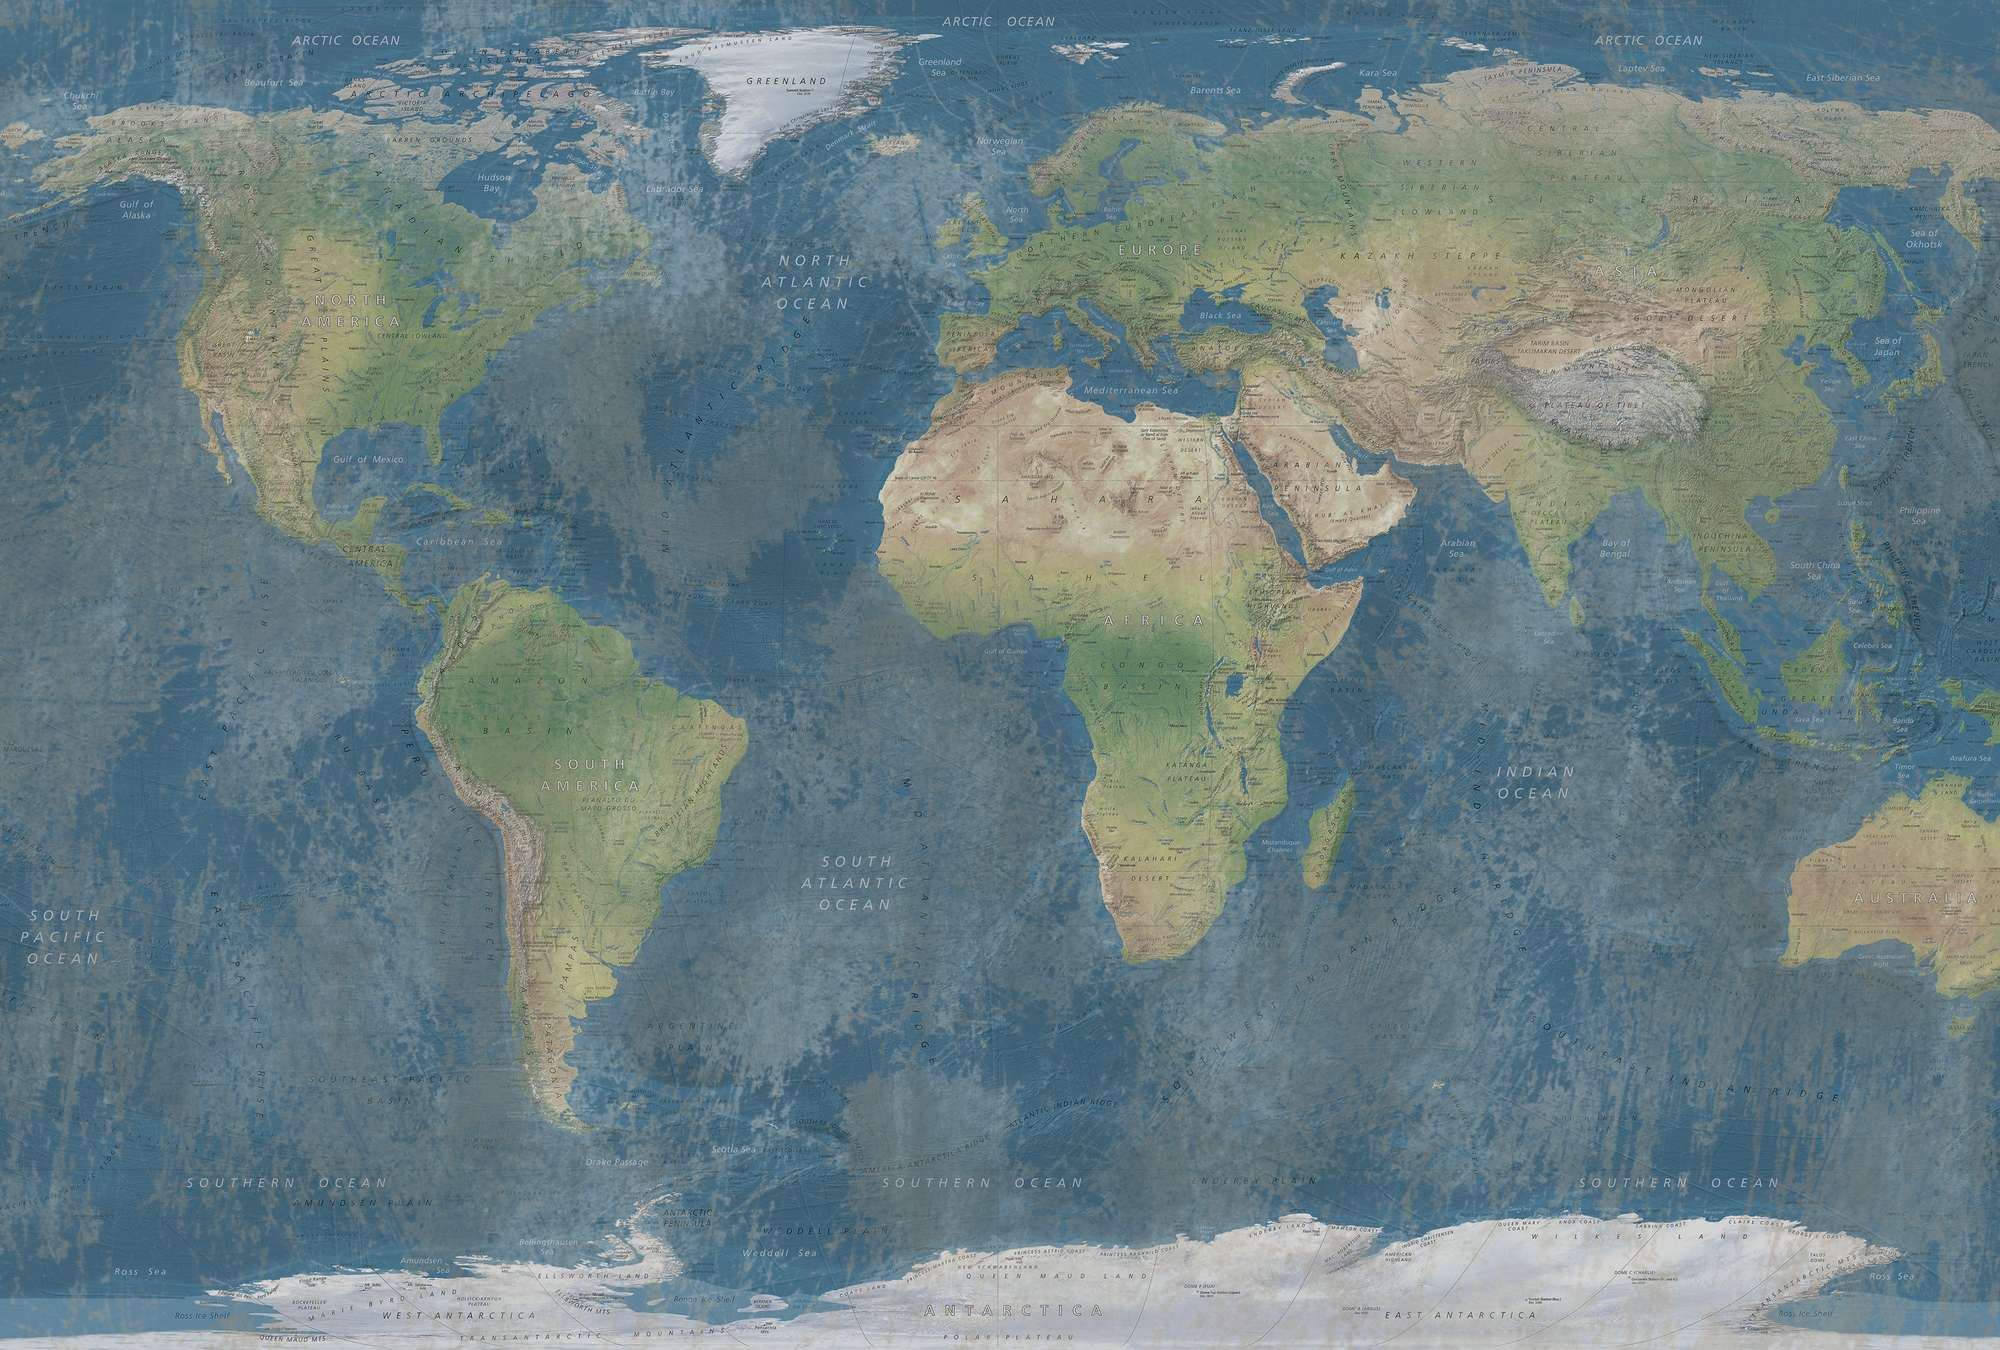             Fototapete Weltkarte in natürlicher Farbgebung
        